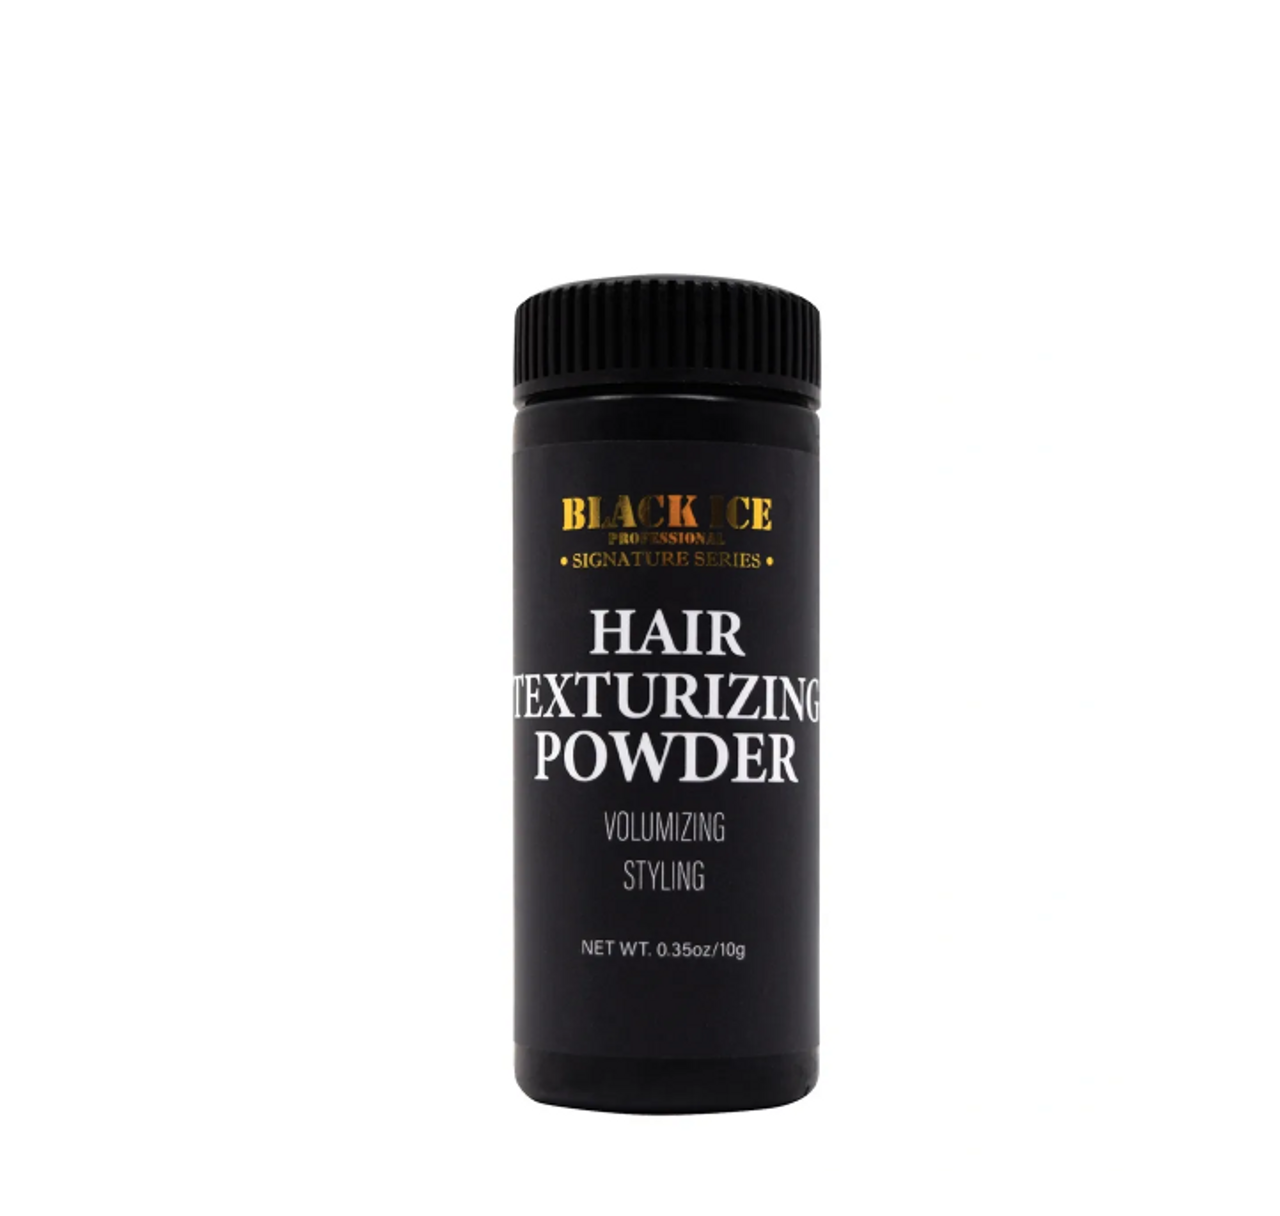 Black Ice Hair Building Magic Fiber w/ Applicator Black